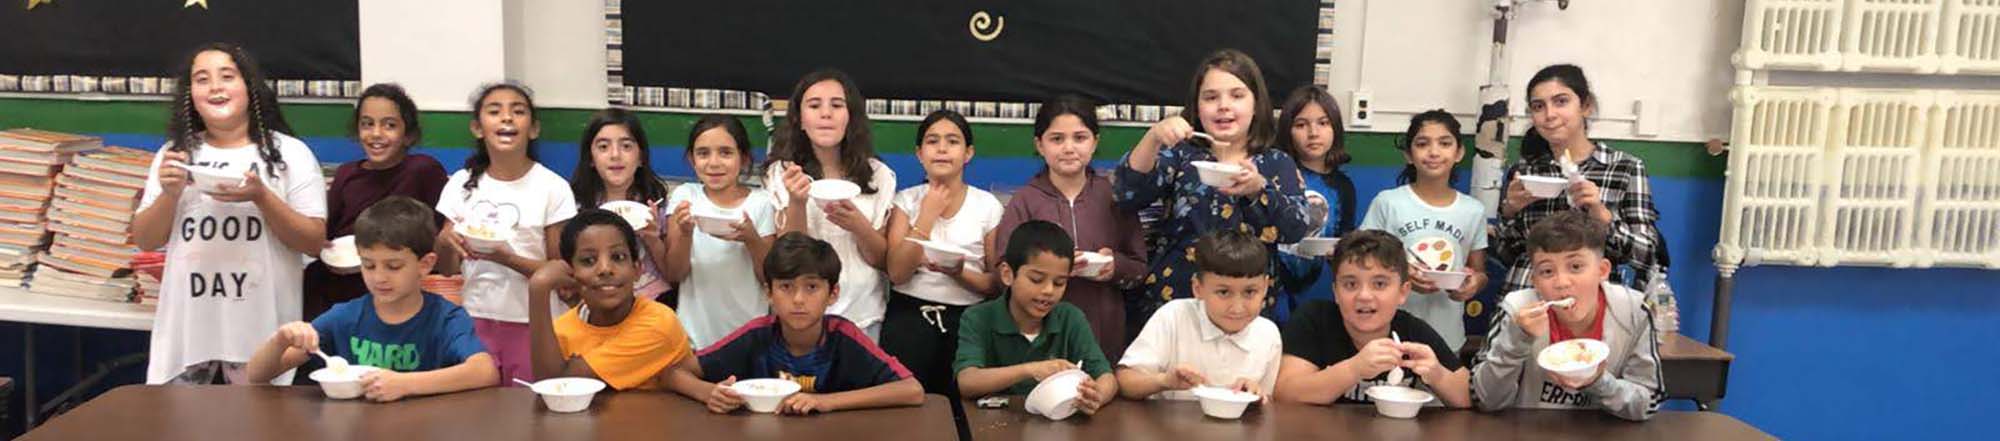 Elementary kids eating ice cream